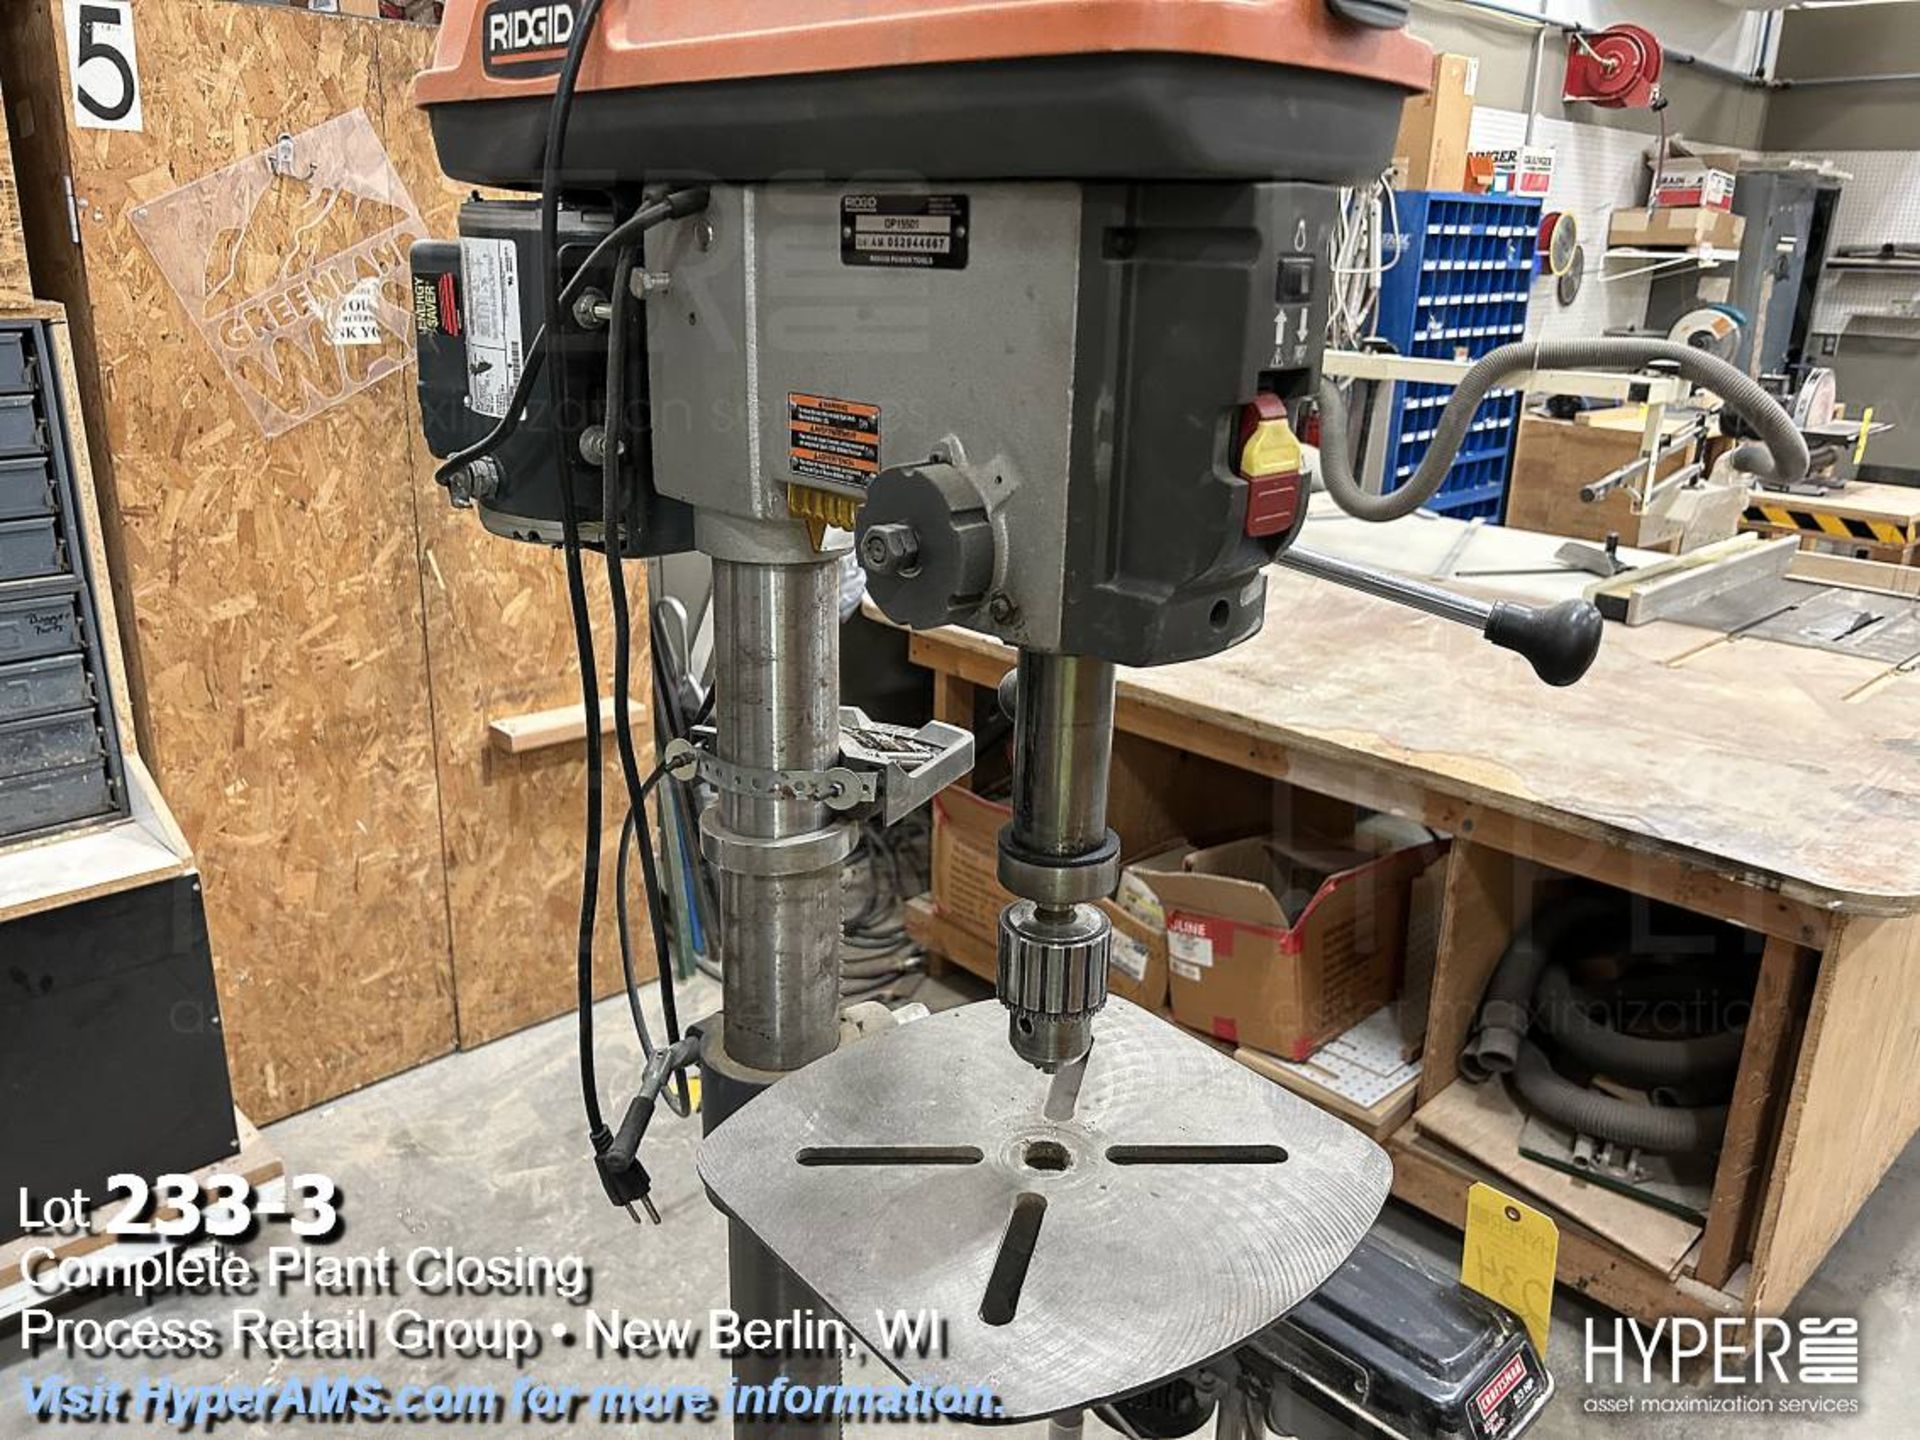 Ridgid DP15501 drill press - Image 3 of 5